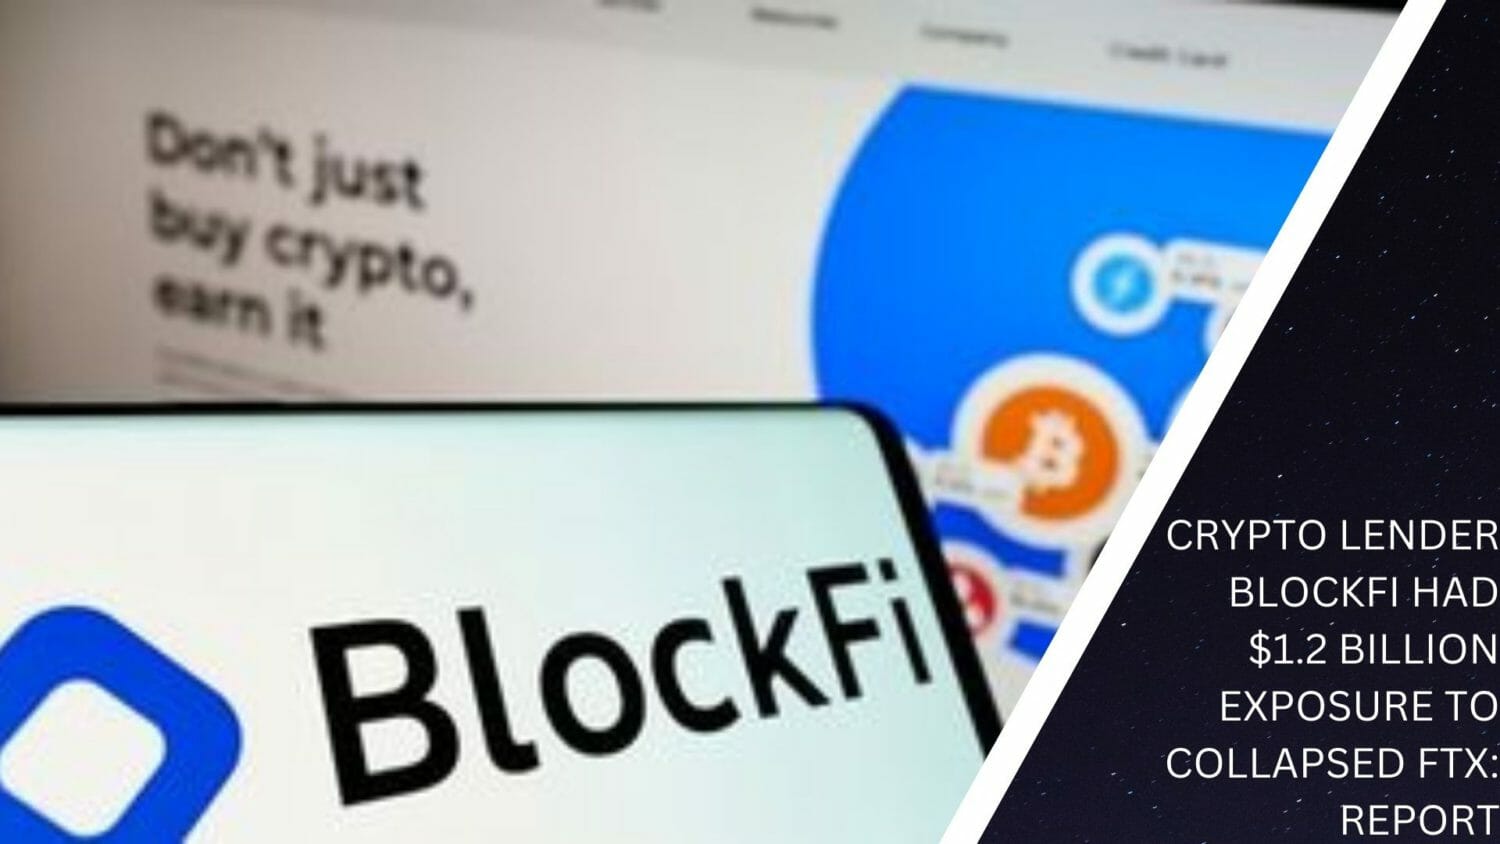 Crypto Lender Blockfi Had $1.2 Billion Exposure To Collapsed Ftx